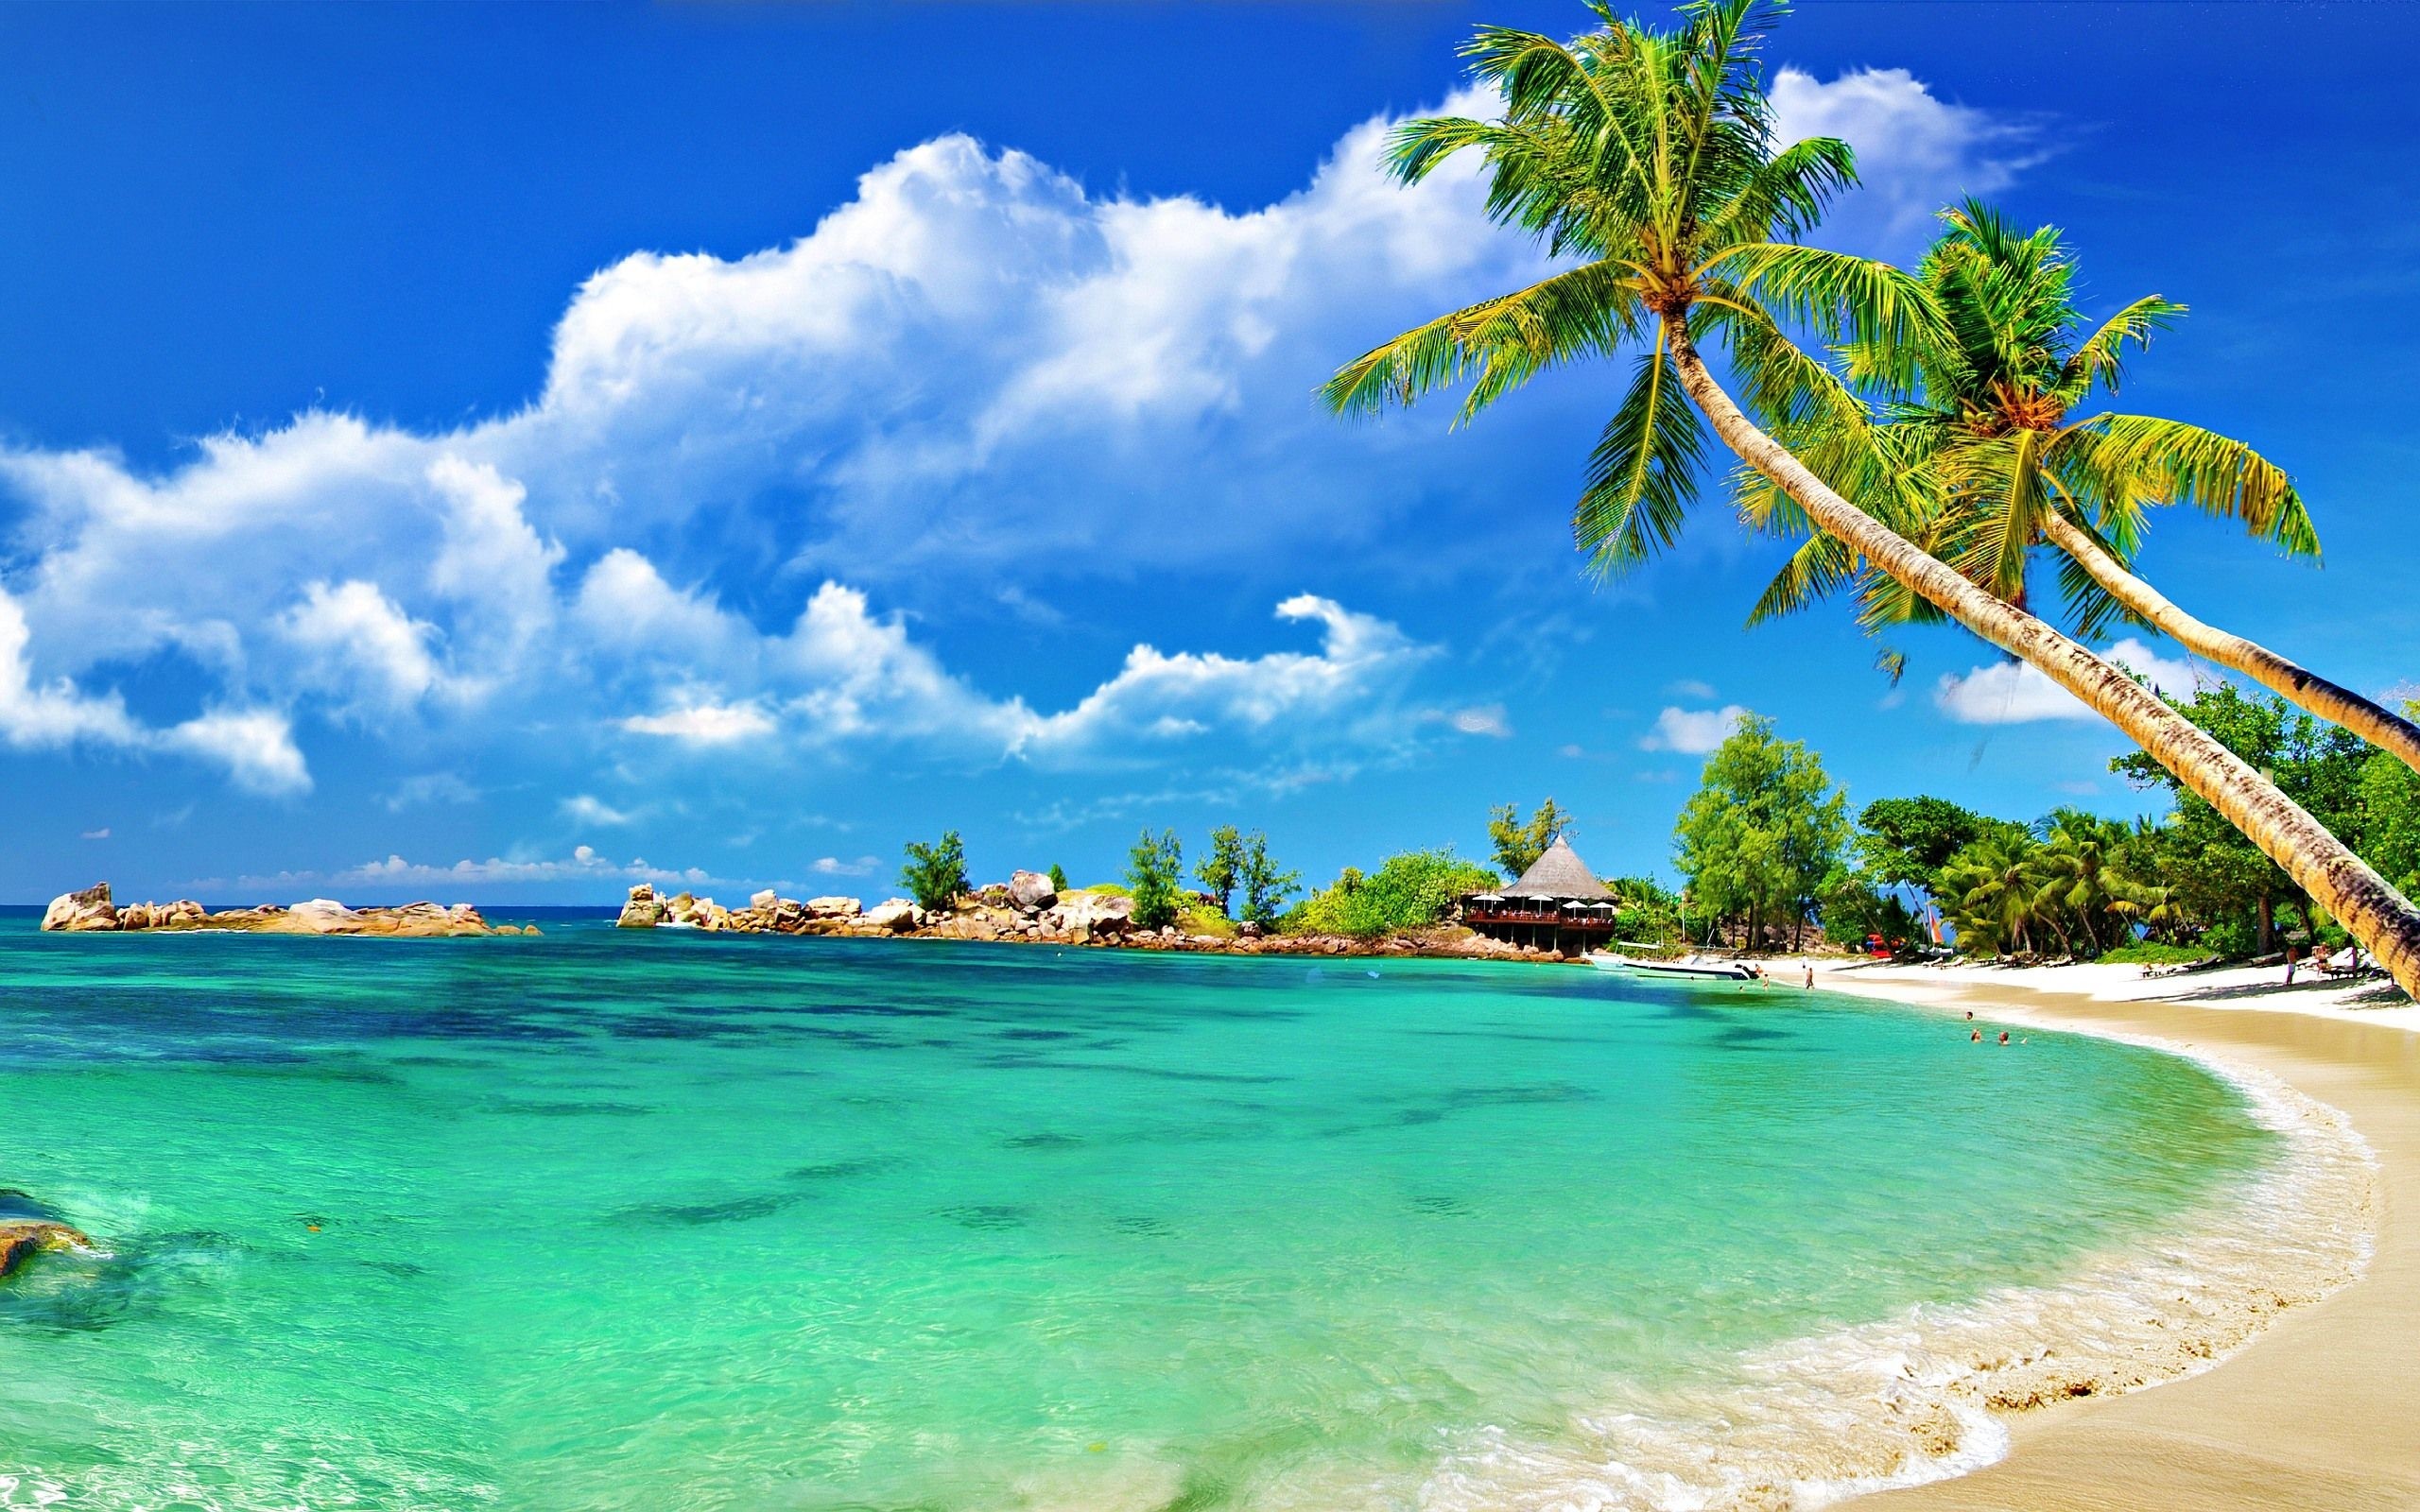 2560x1600 caribbean beach desktop wallpaper - Beach is the best place for enjoyment  It is a place